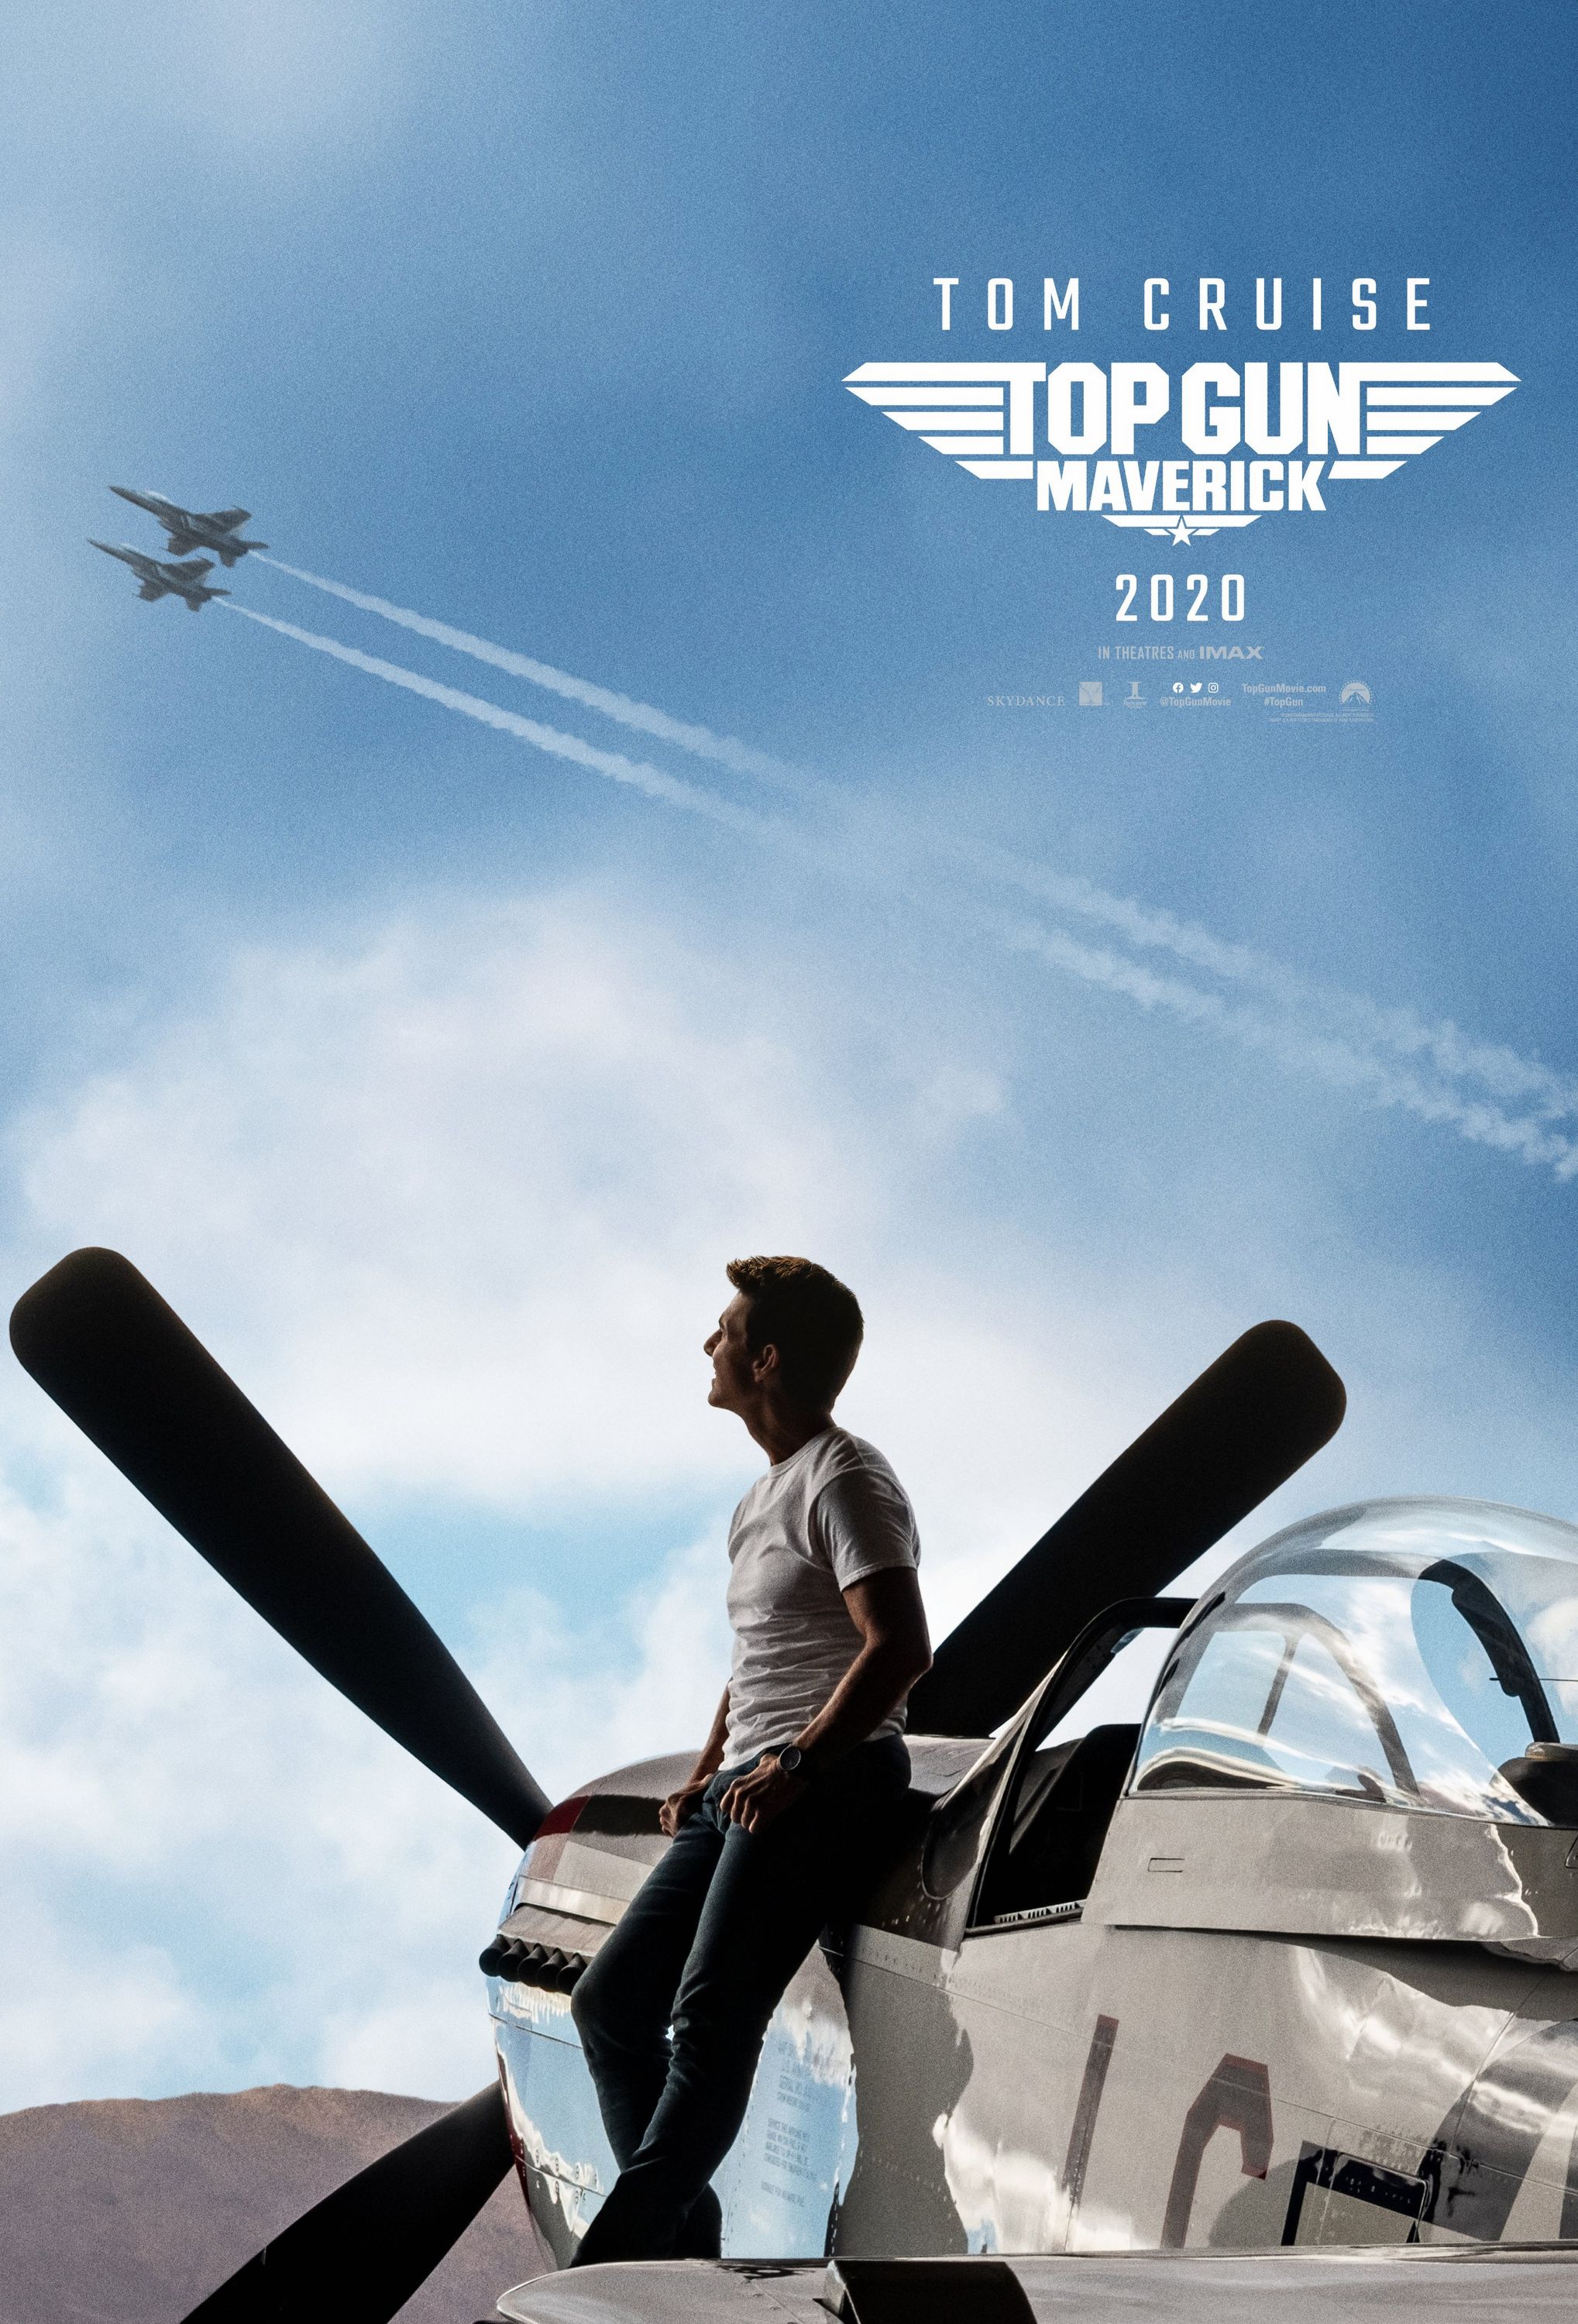 Top-Gun-Poster-005.jpg